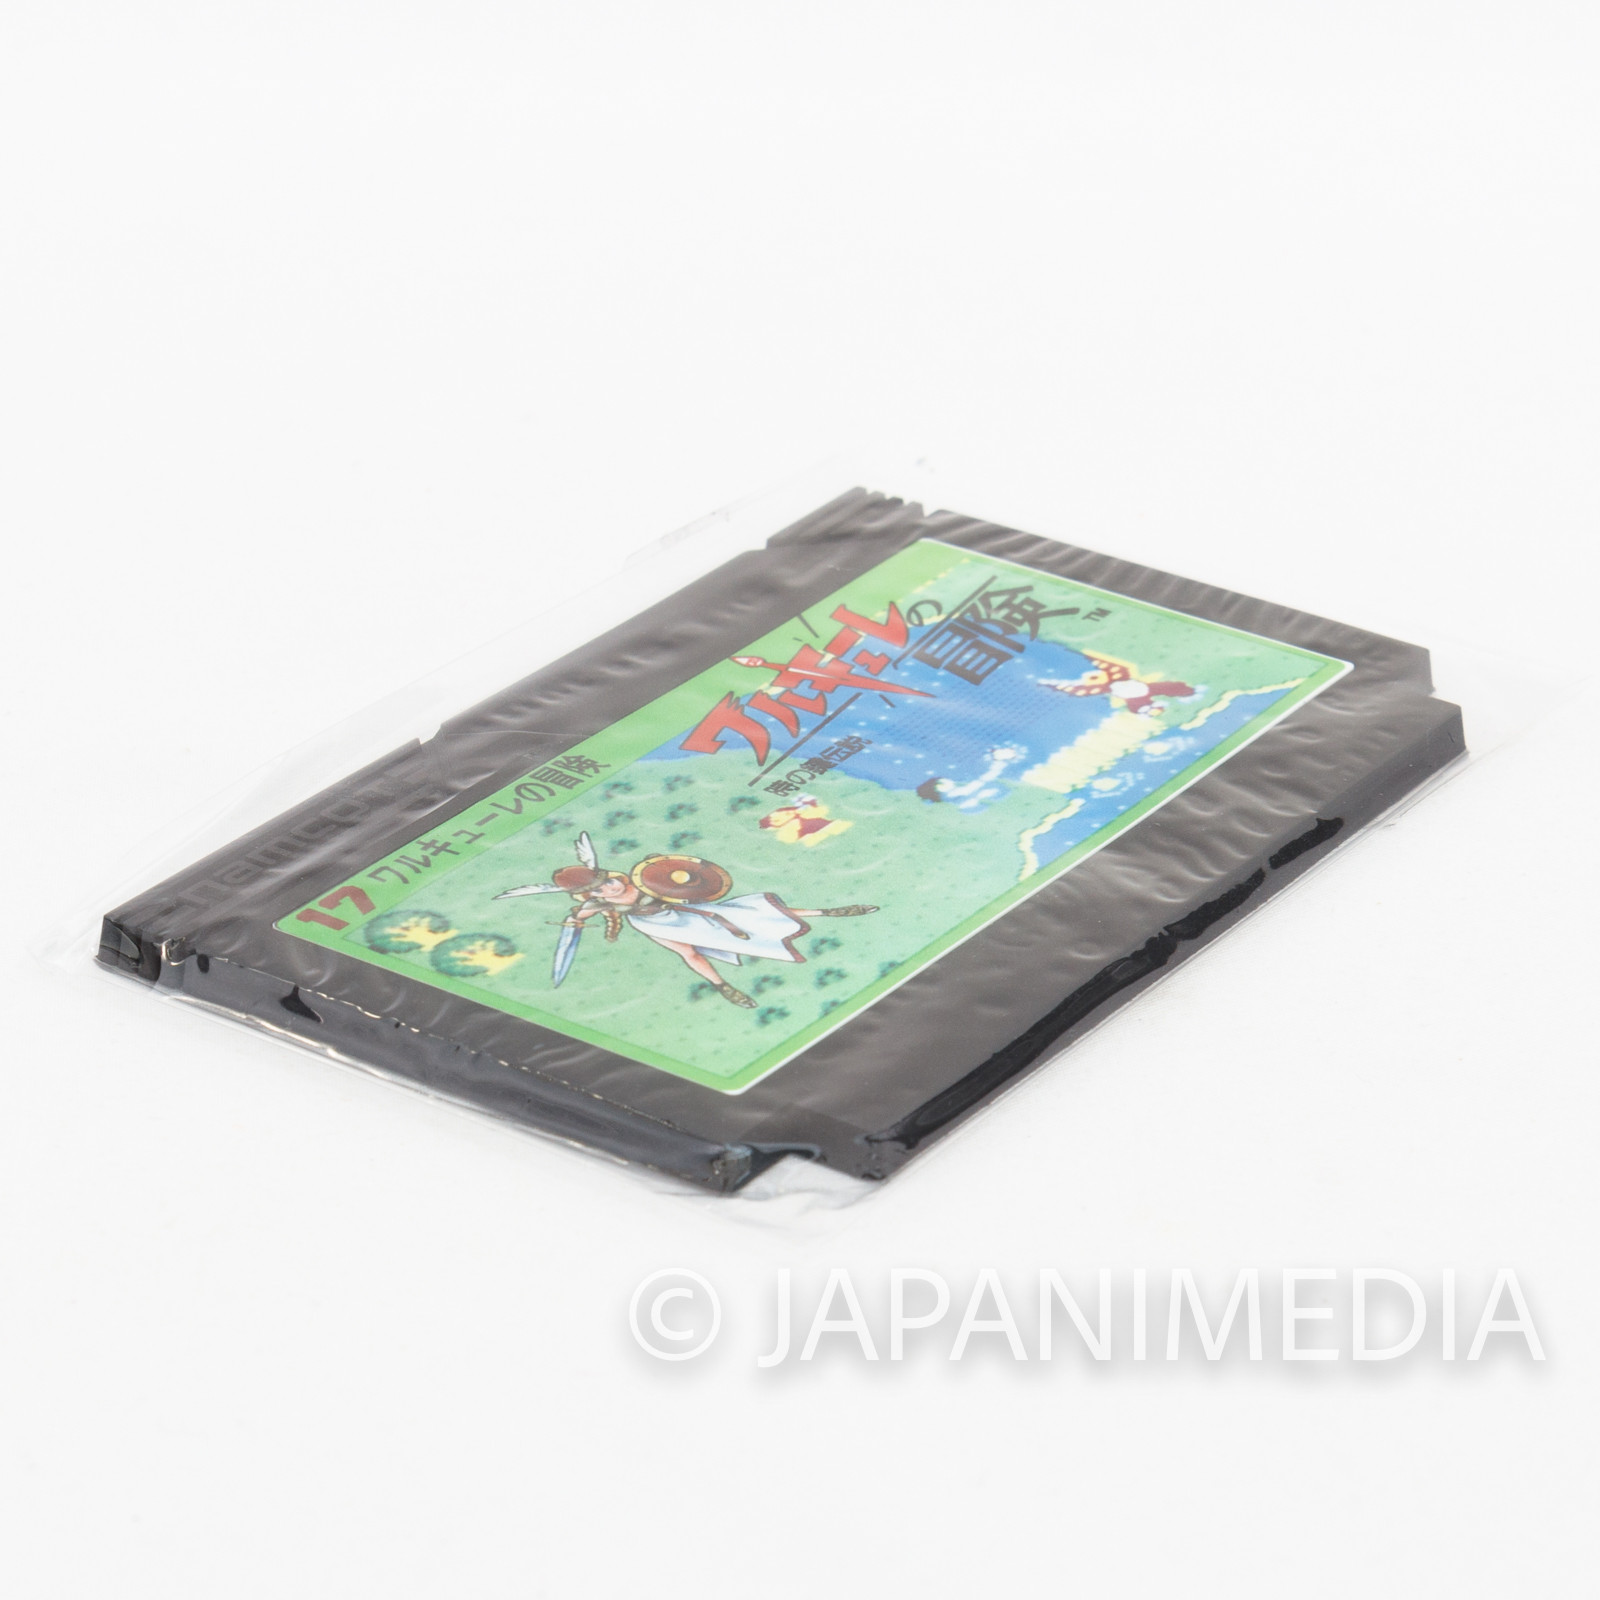 Valkyrie no Boken Namco Cassette Type Rubber Coaster JAPAN FAMICOM NEC